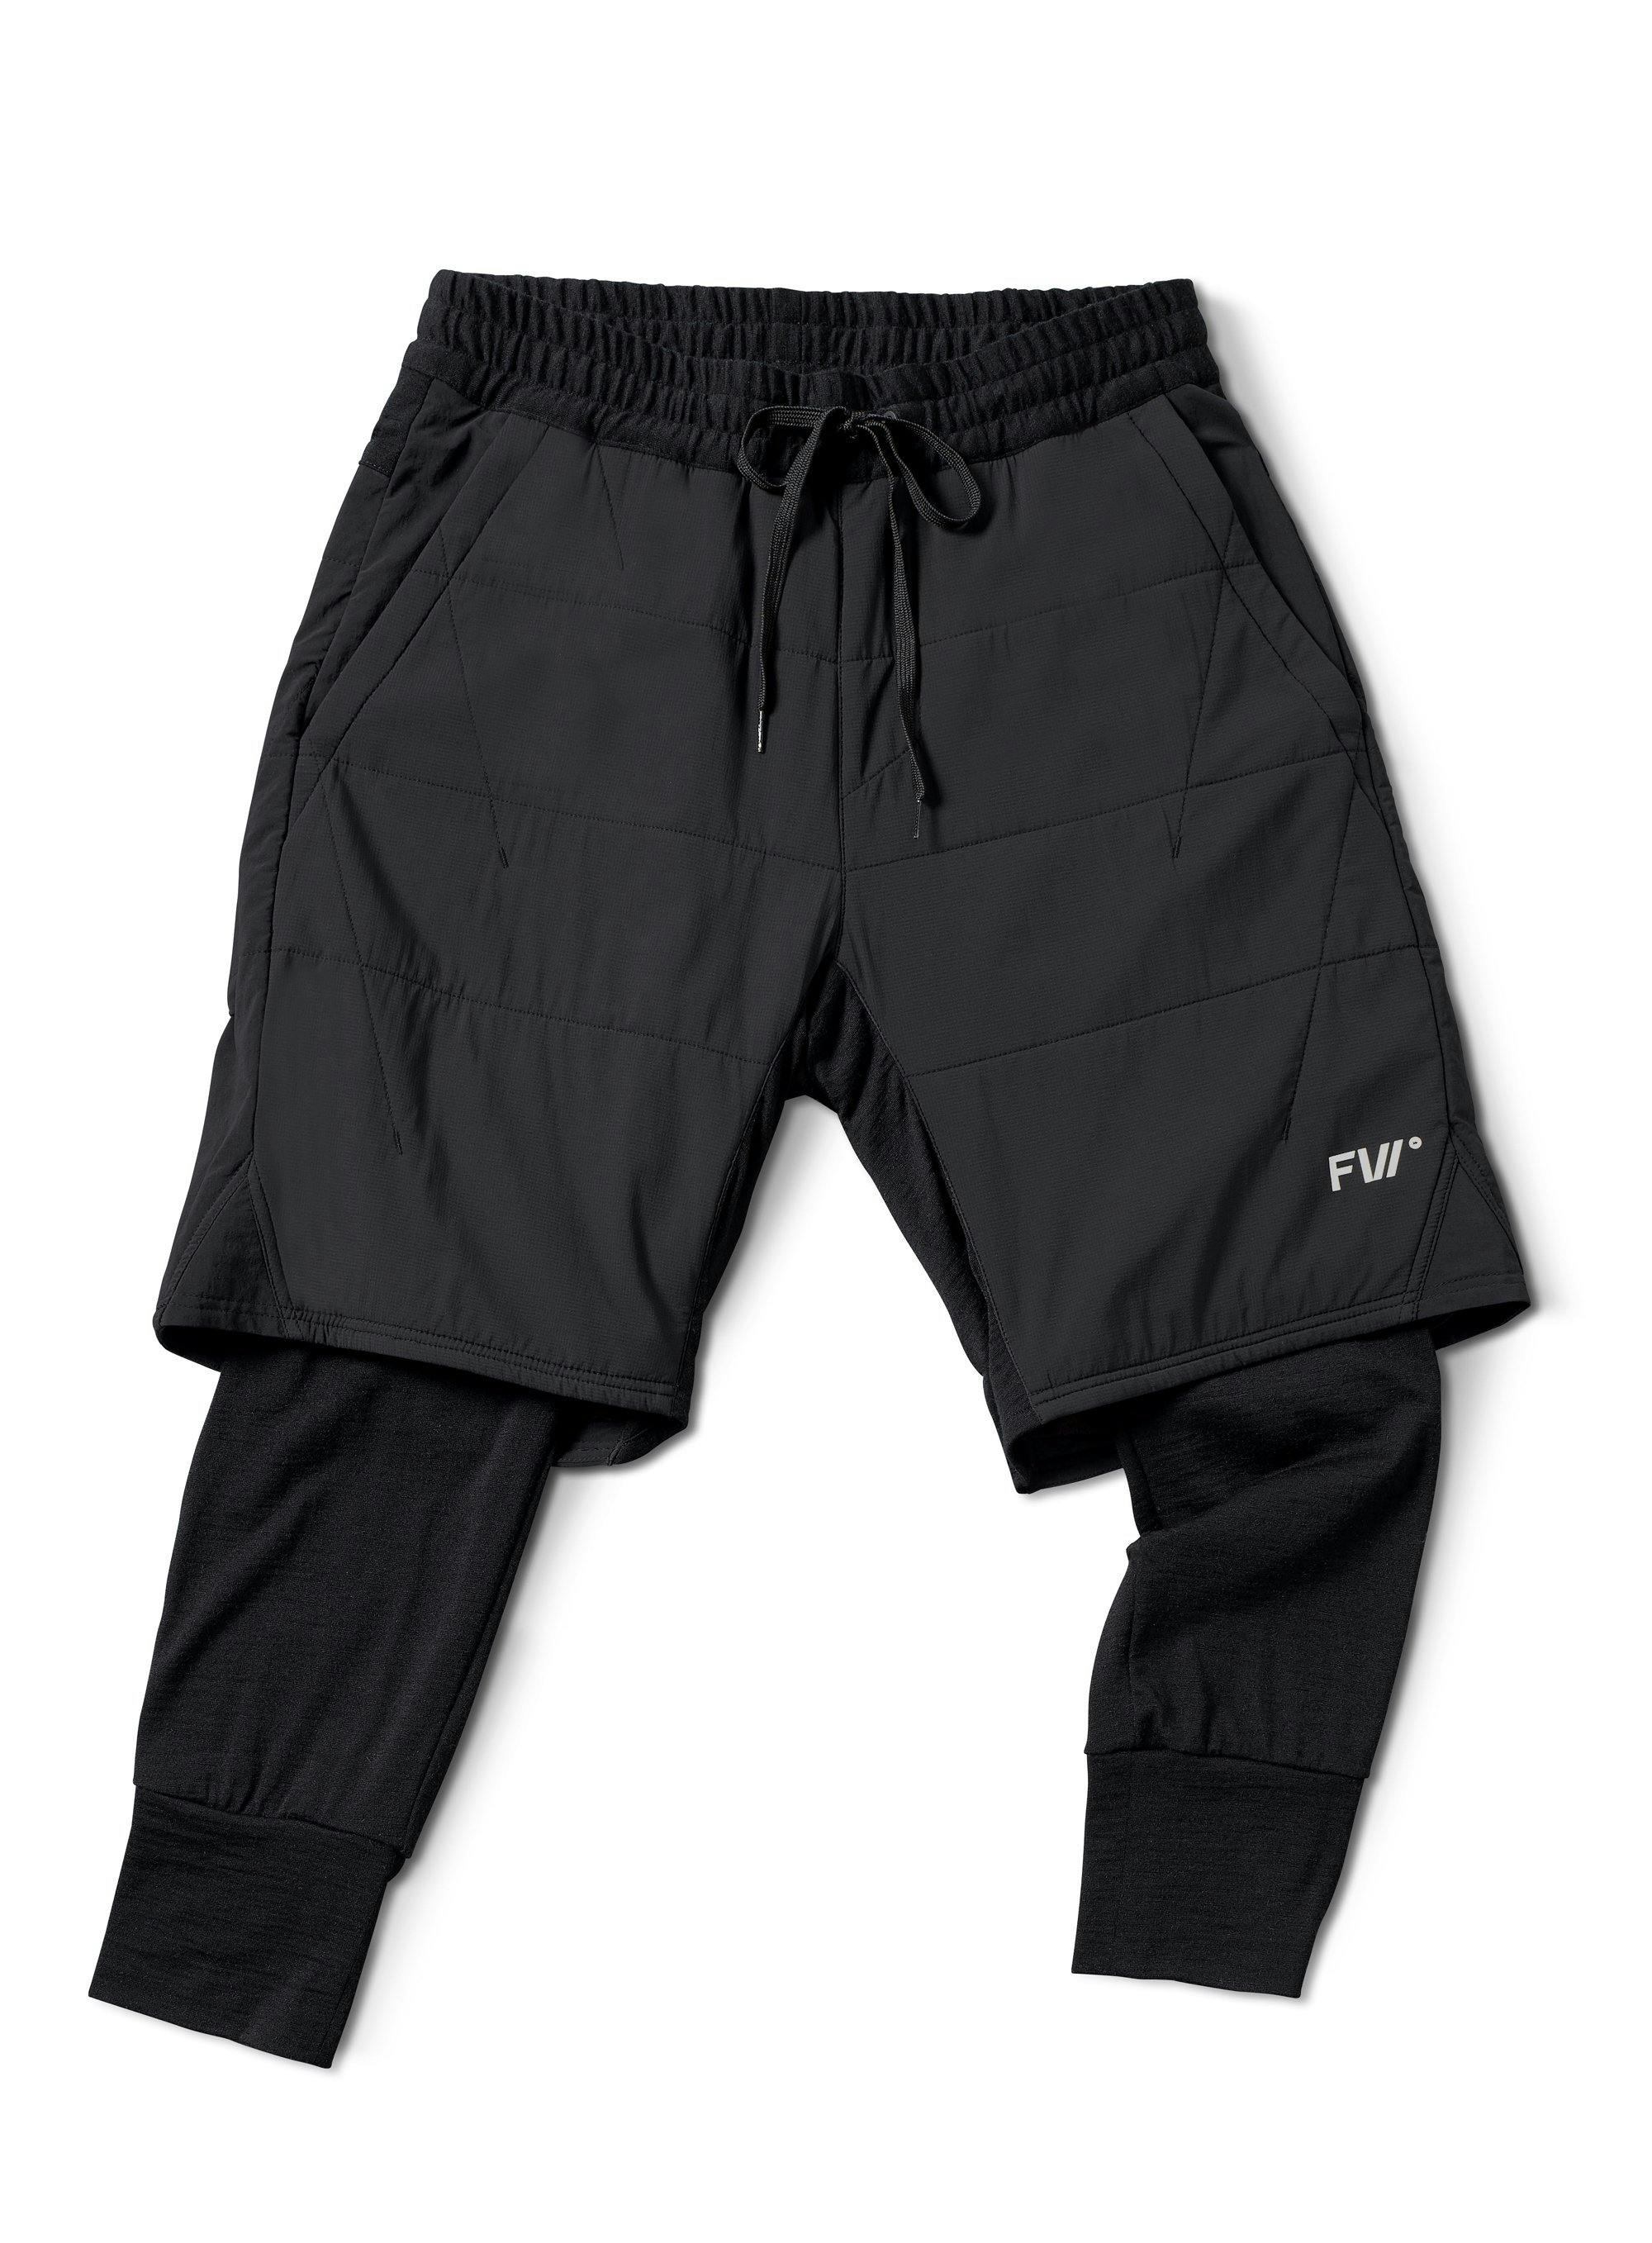 FW Men's Manifest Tour Hybrid 2L Insulated Pants